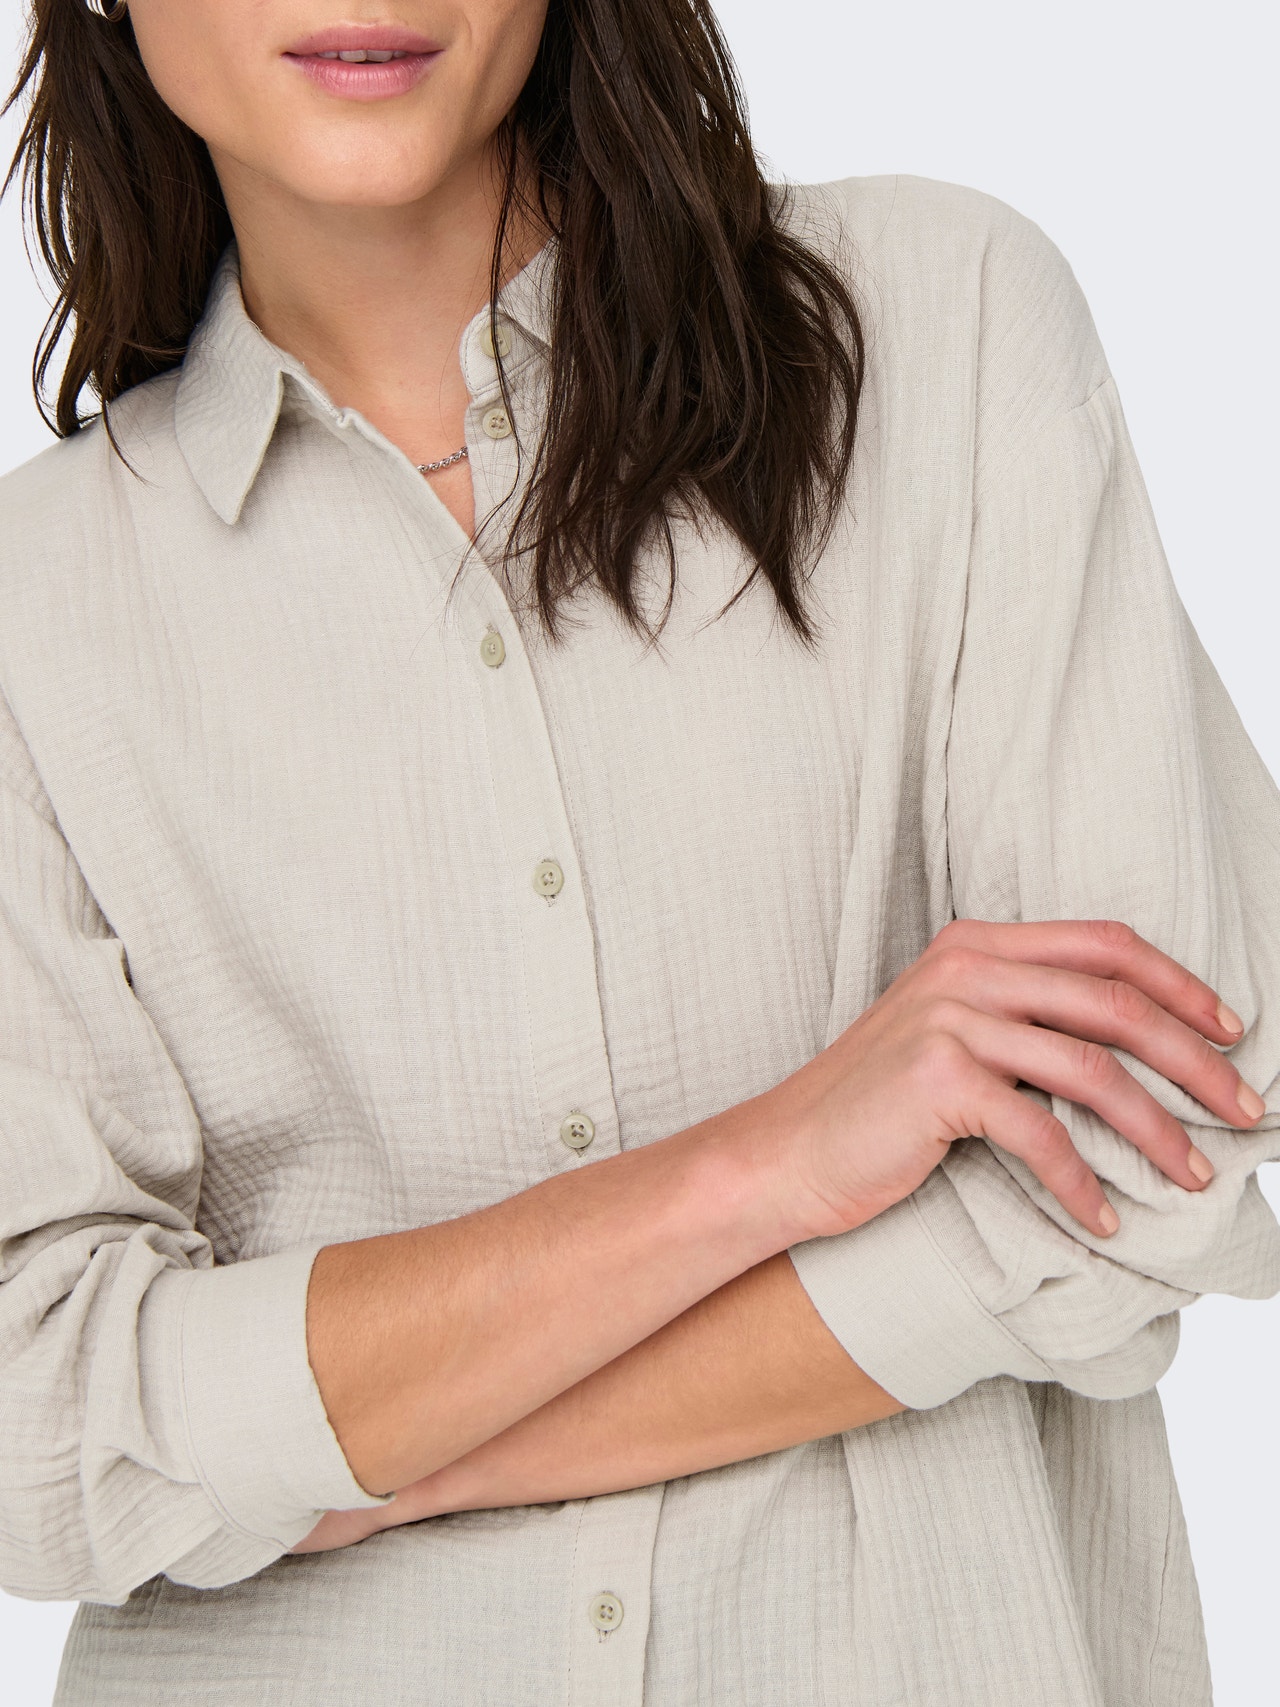 ONLY Normal geschnitten Hemdkragen Ärmelbündchen mit Knopf Voluminöser Armschnitt Hemd -Silver Lining - 15271018